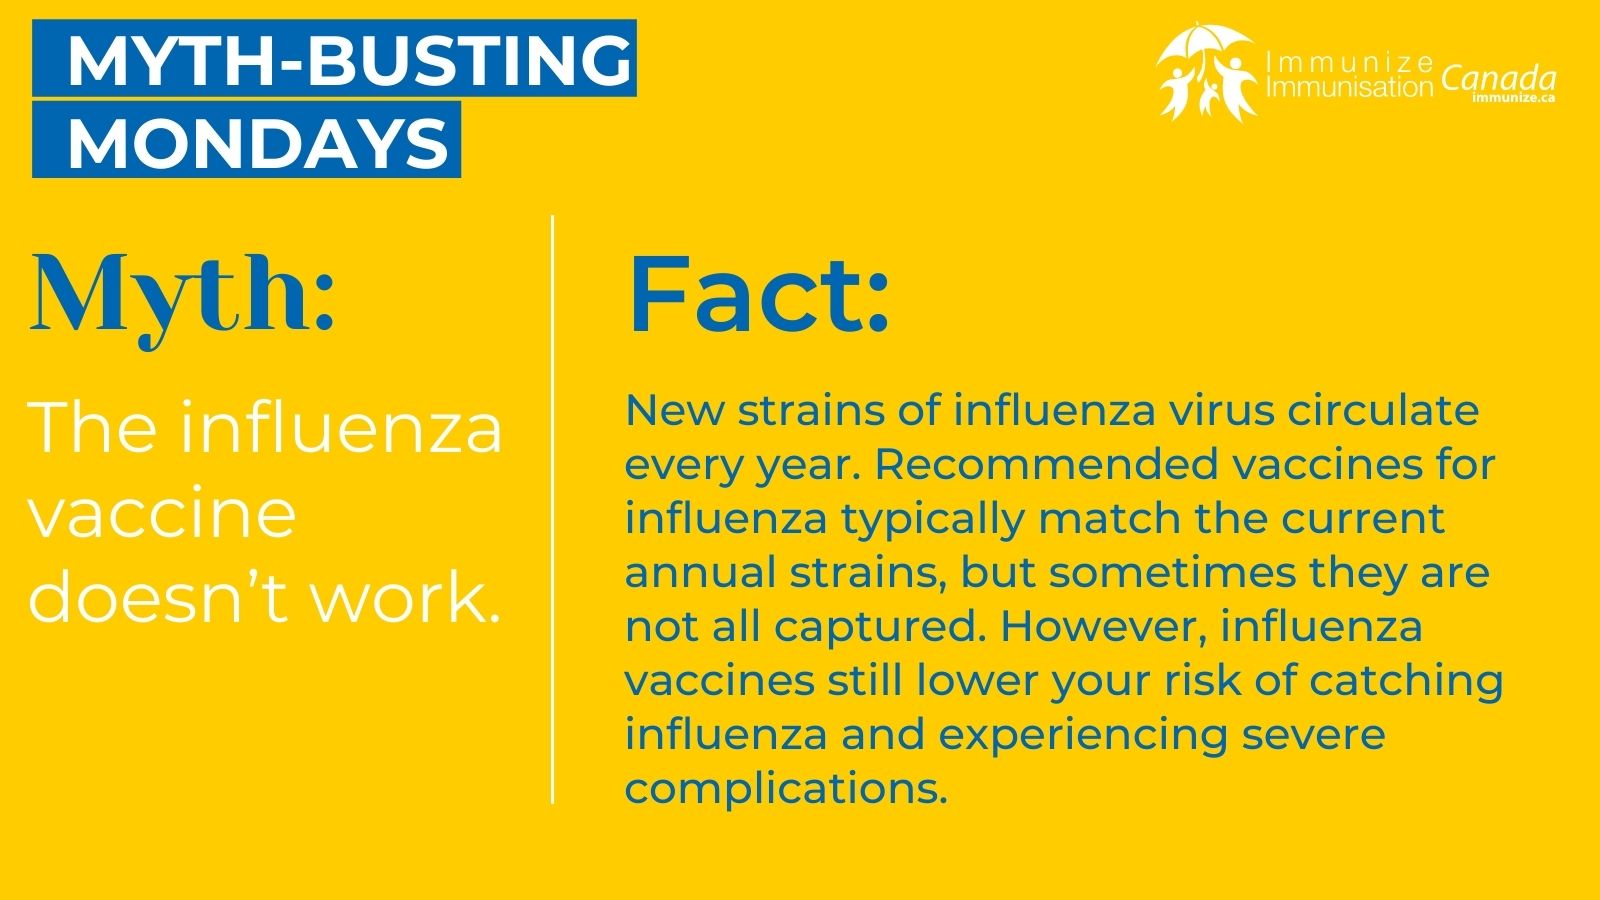 Myth-busting Mondays (Twitter/X) - Influenza 2